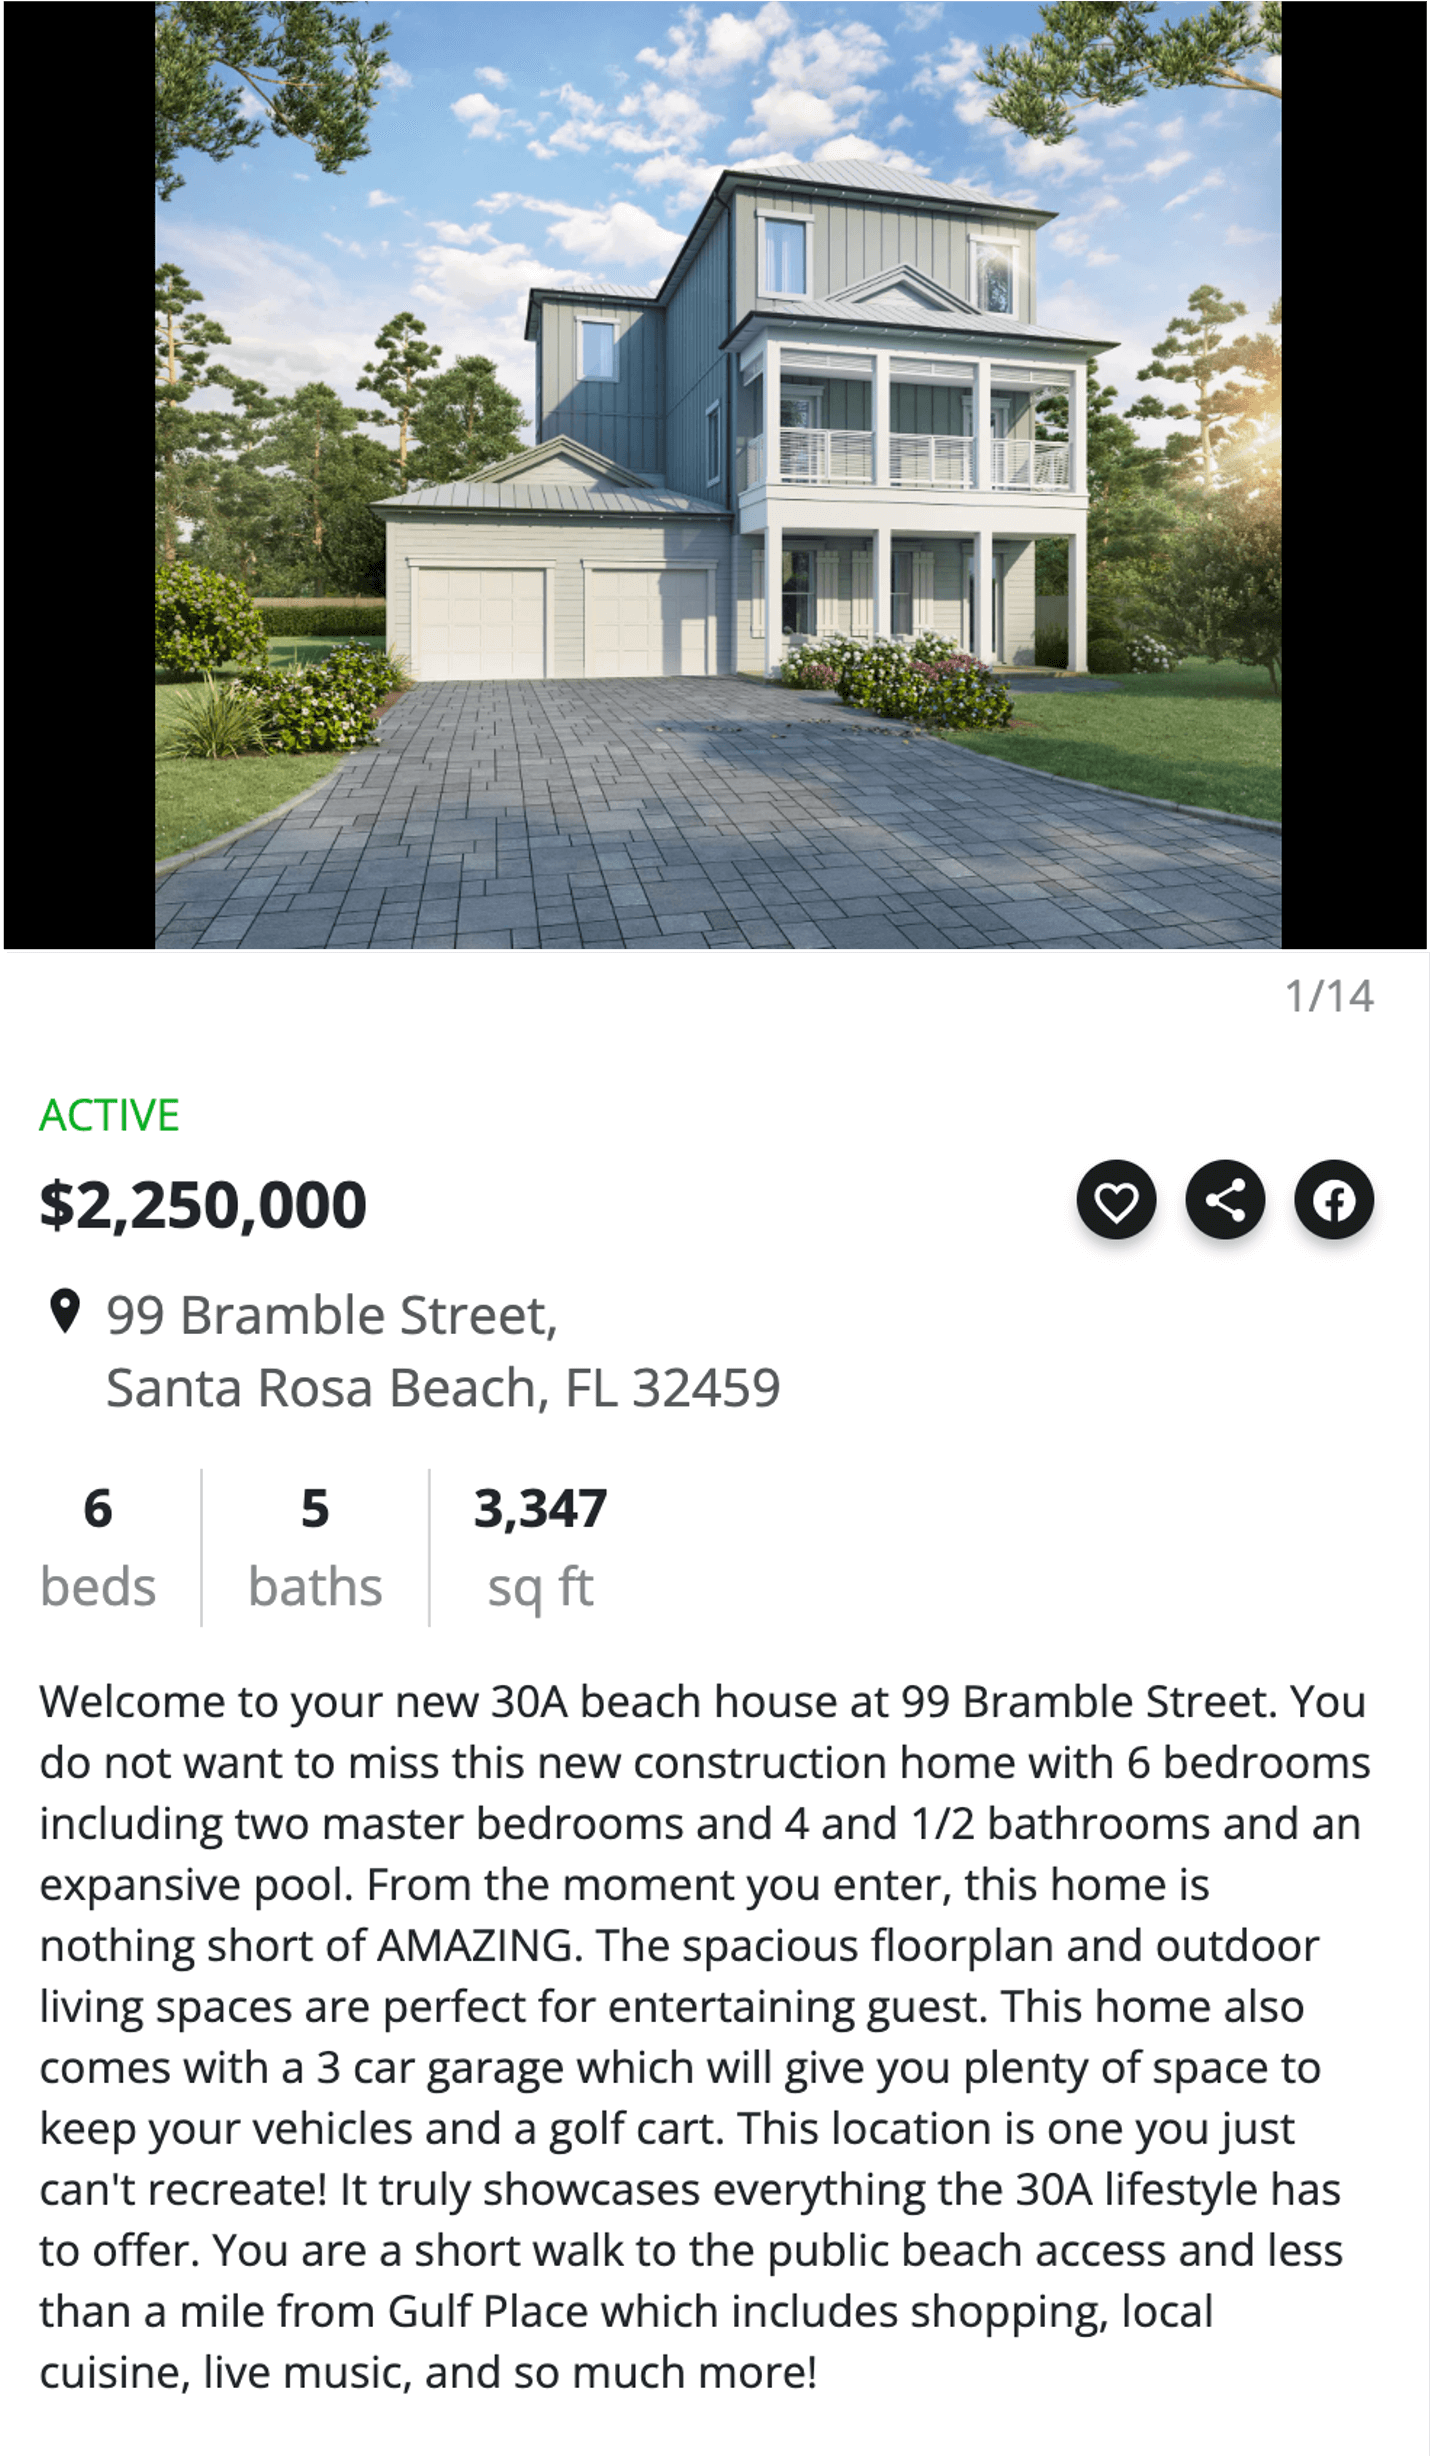 Real estate listing description example #3